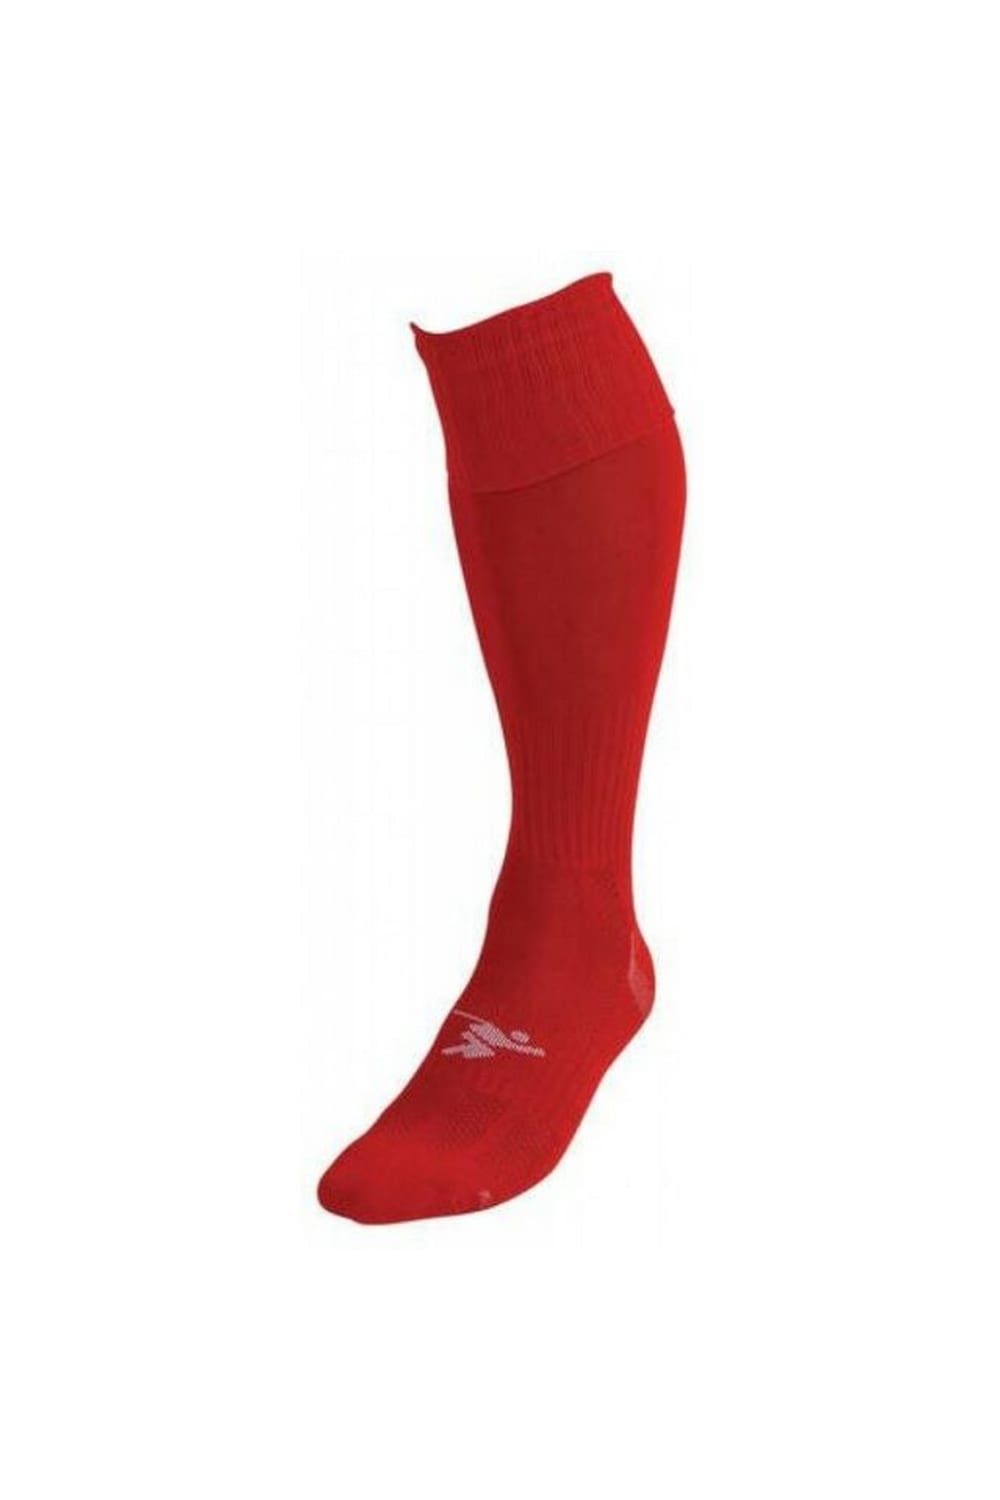 Precision Unisex Adult Pro Plain Football Socks (Red)